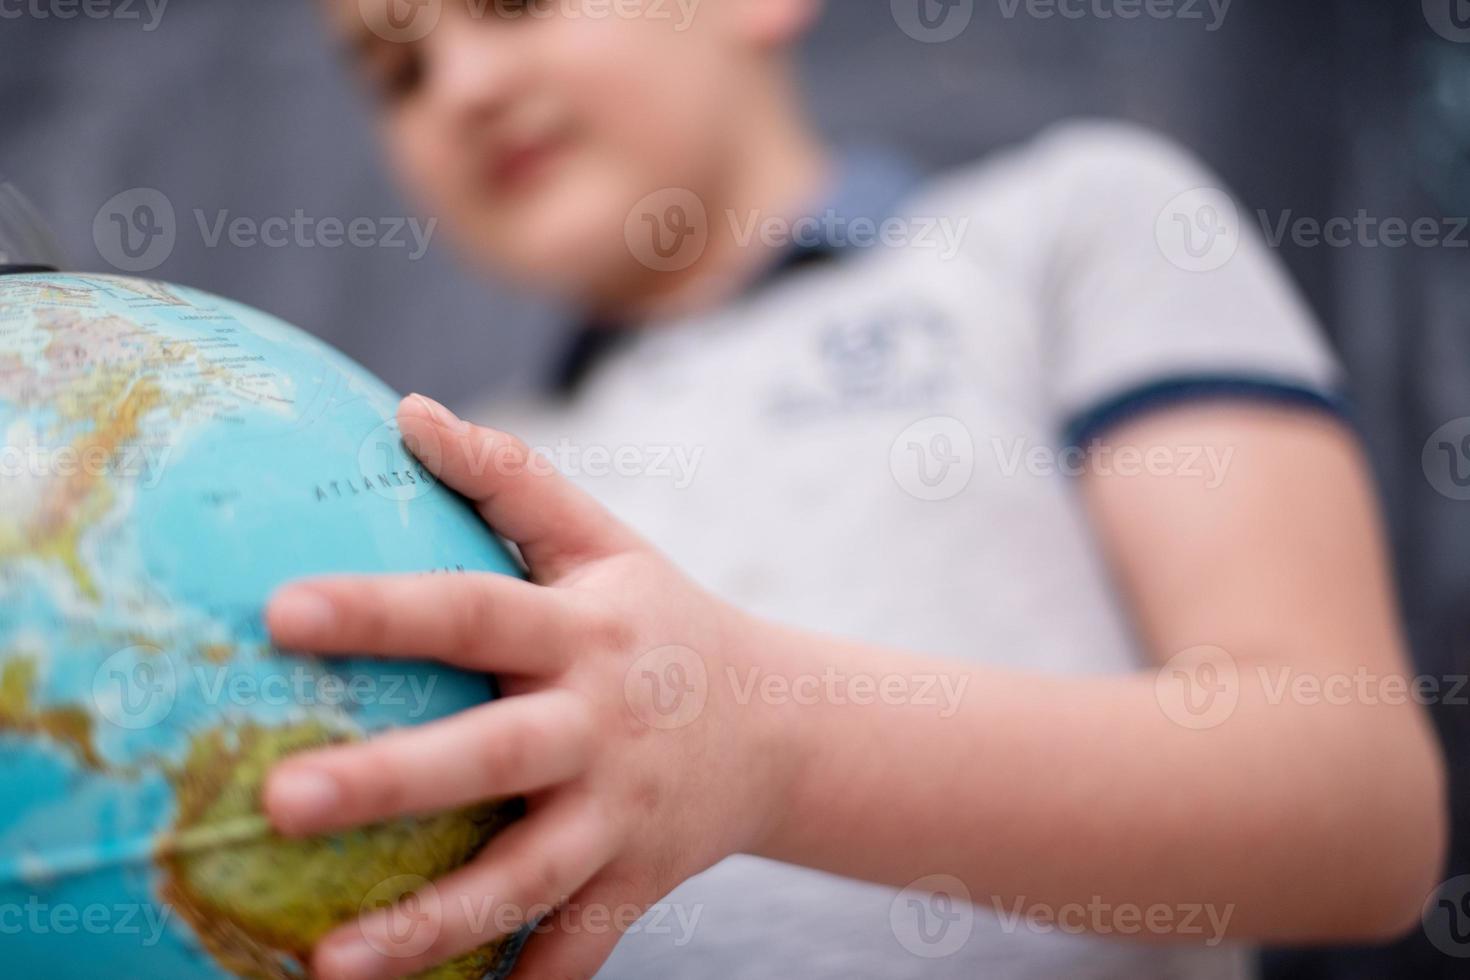 menino usando globo da terra na frente do quadro-negro foto